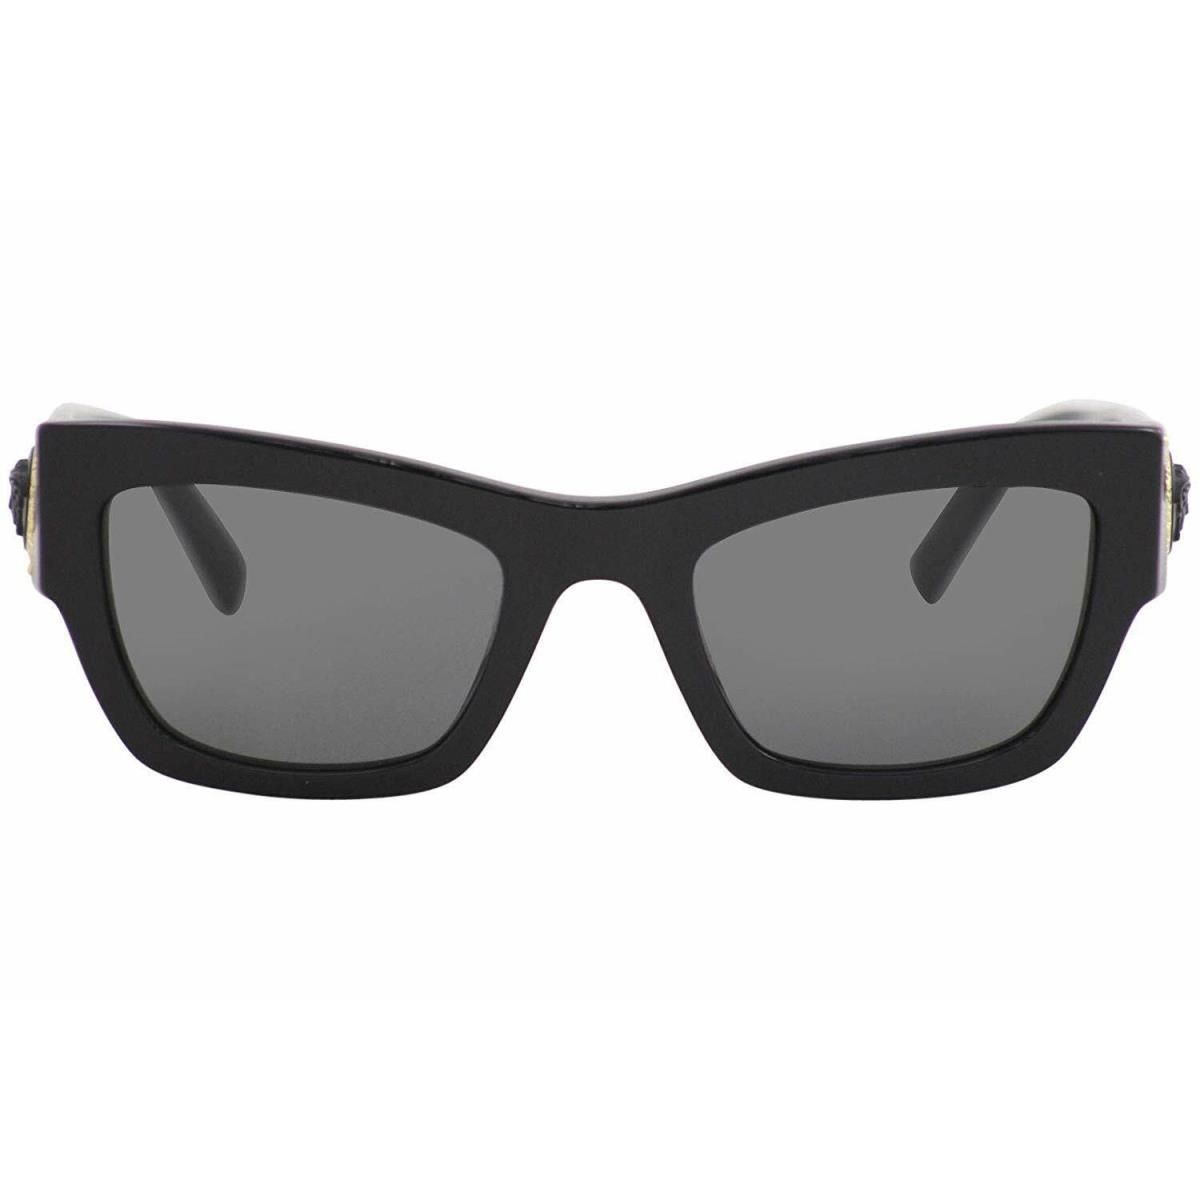 Versace VE4358 529587 52mm Sunglasses Black / Grey Lens